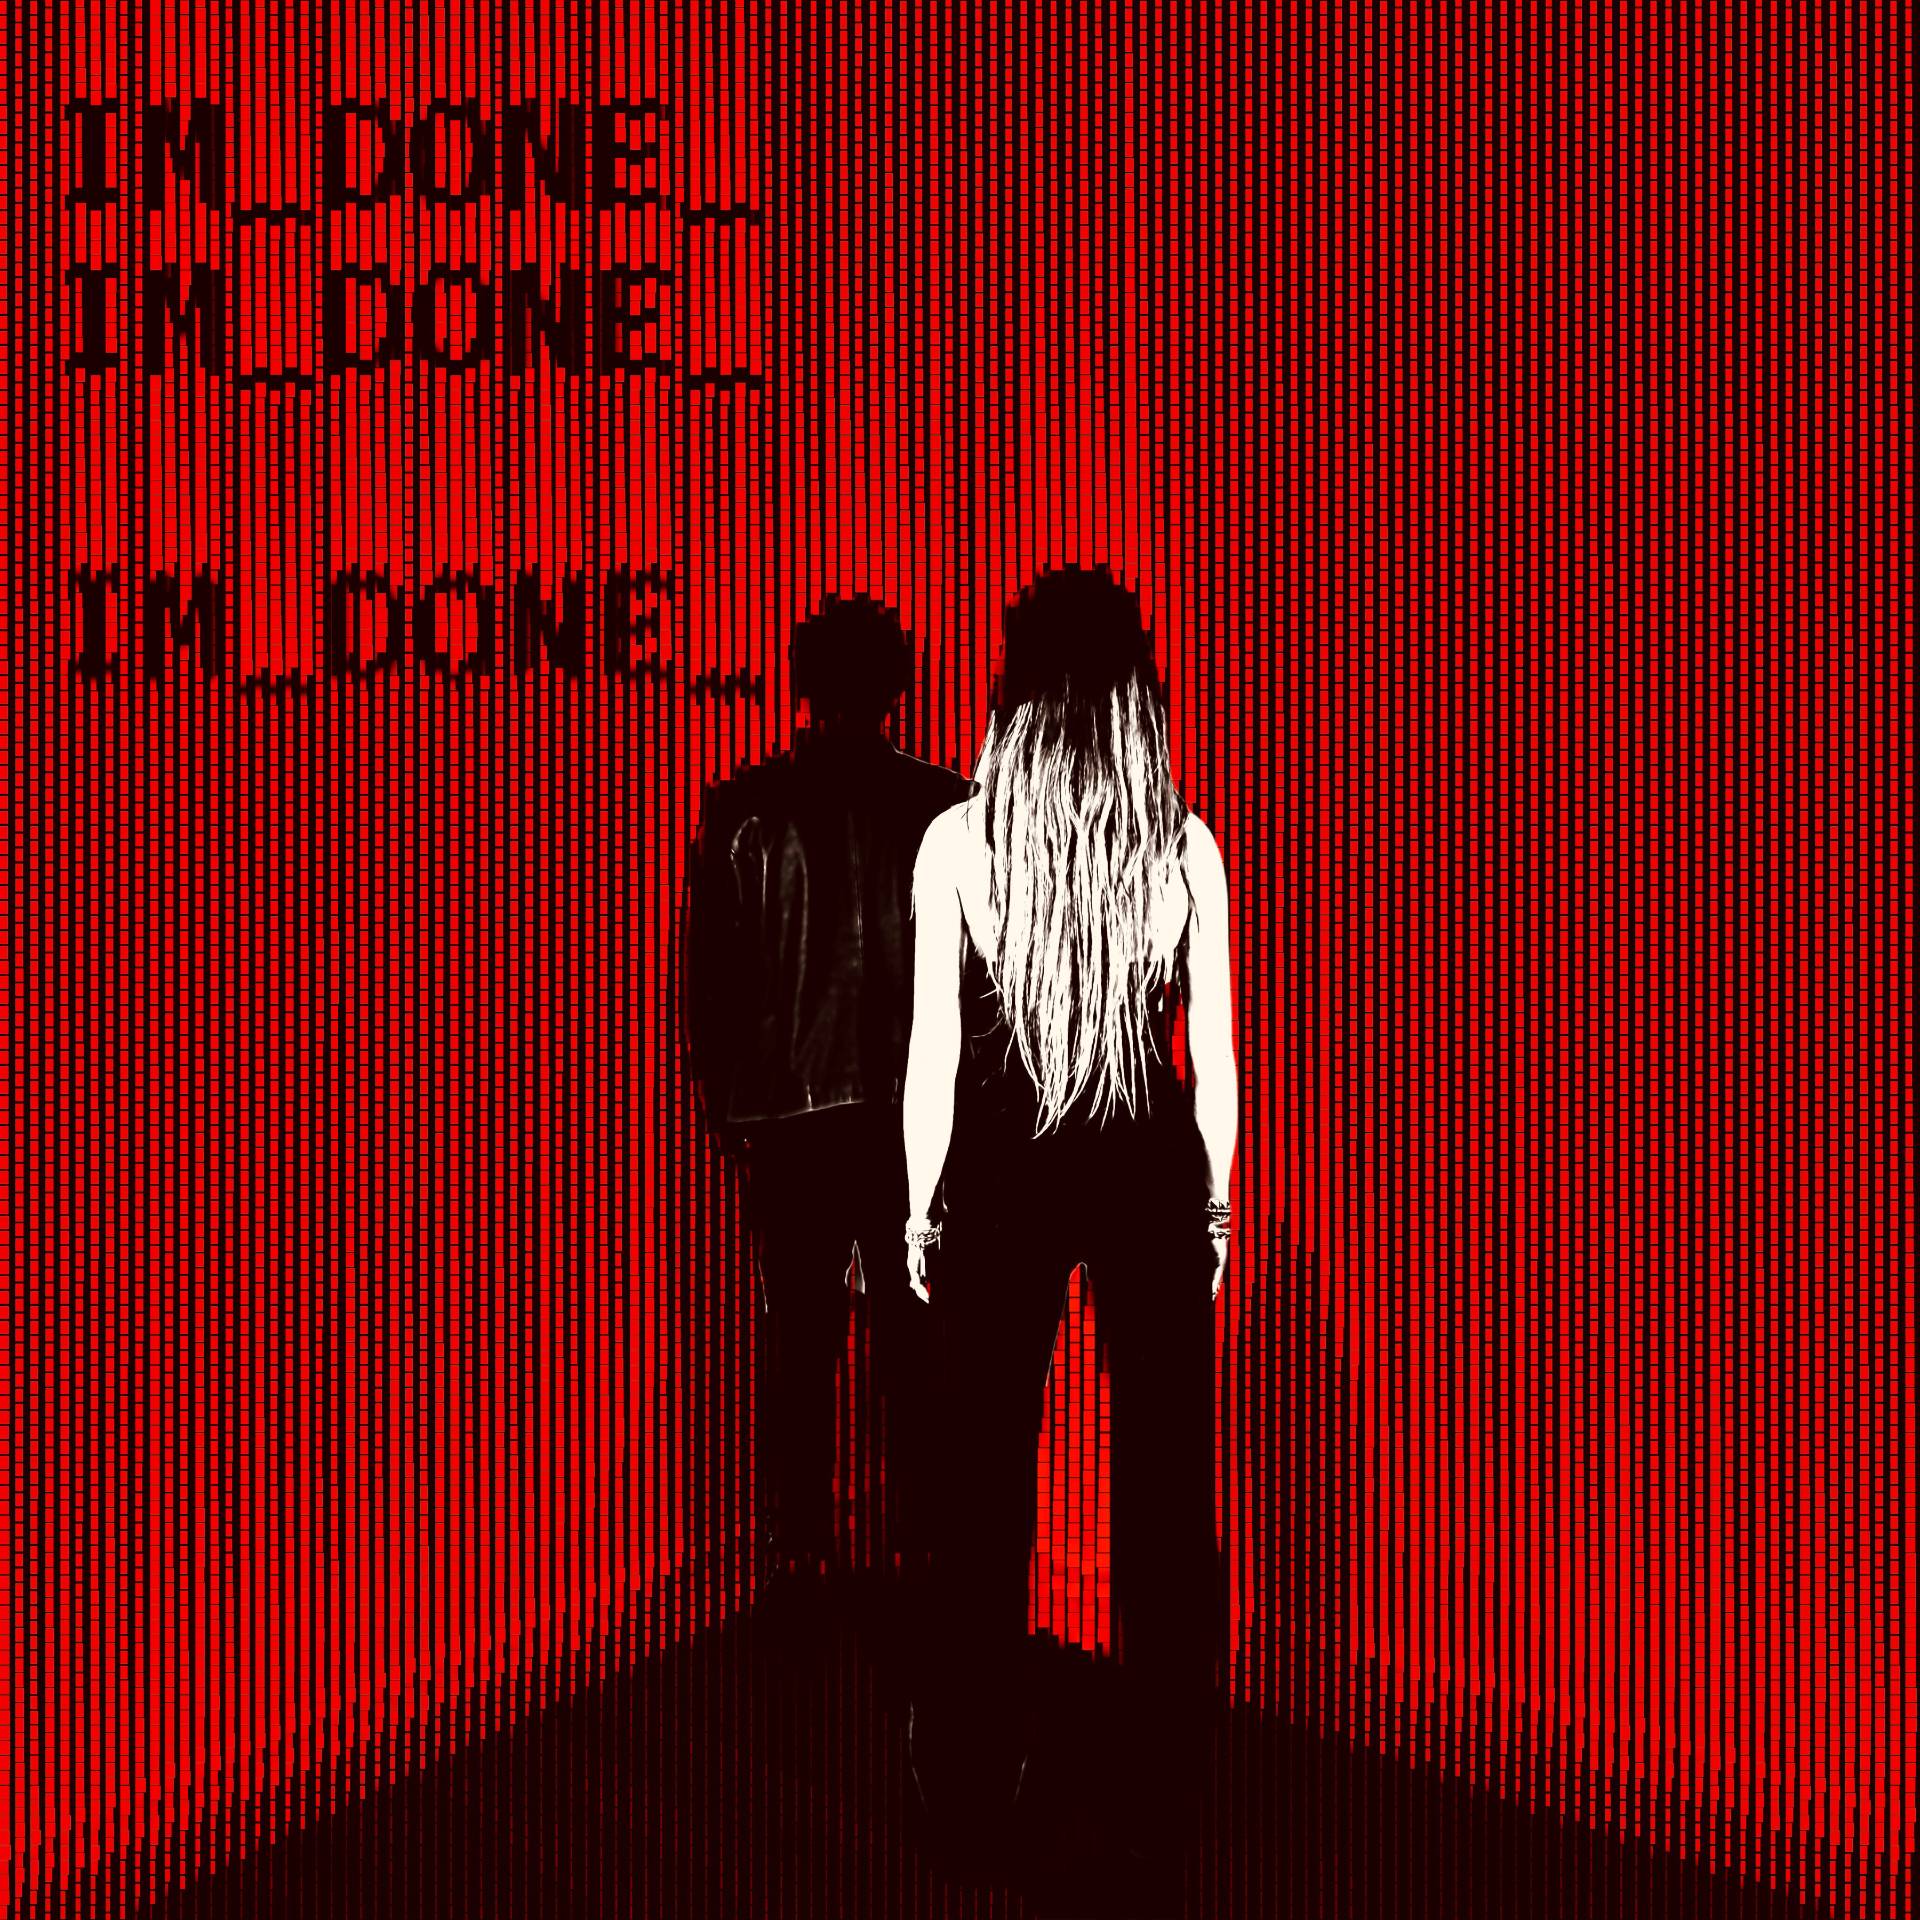 The Haunt “I’m Done” single artwork